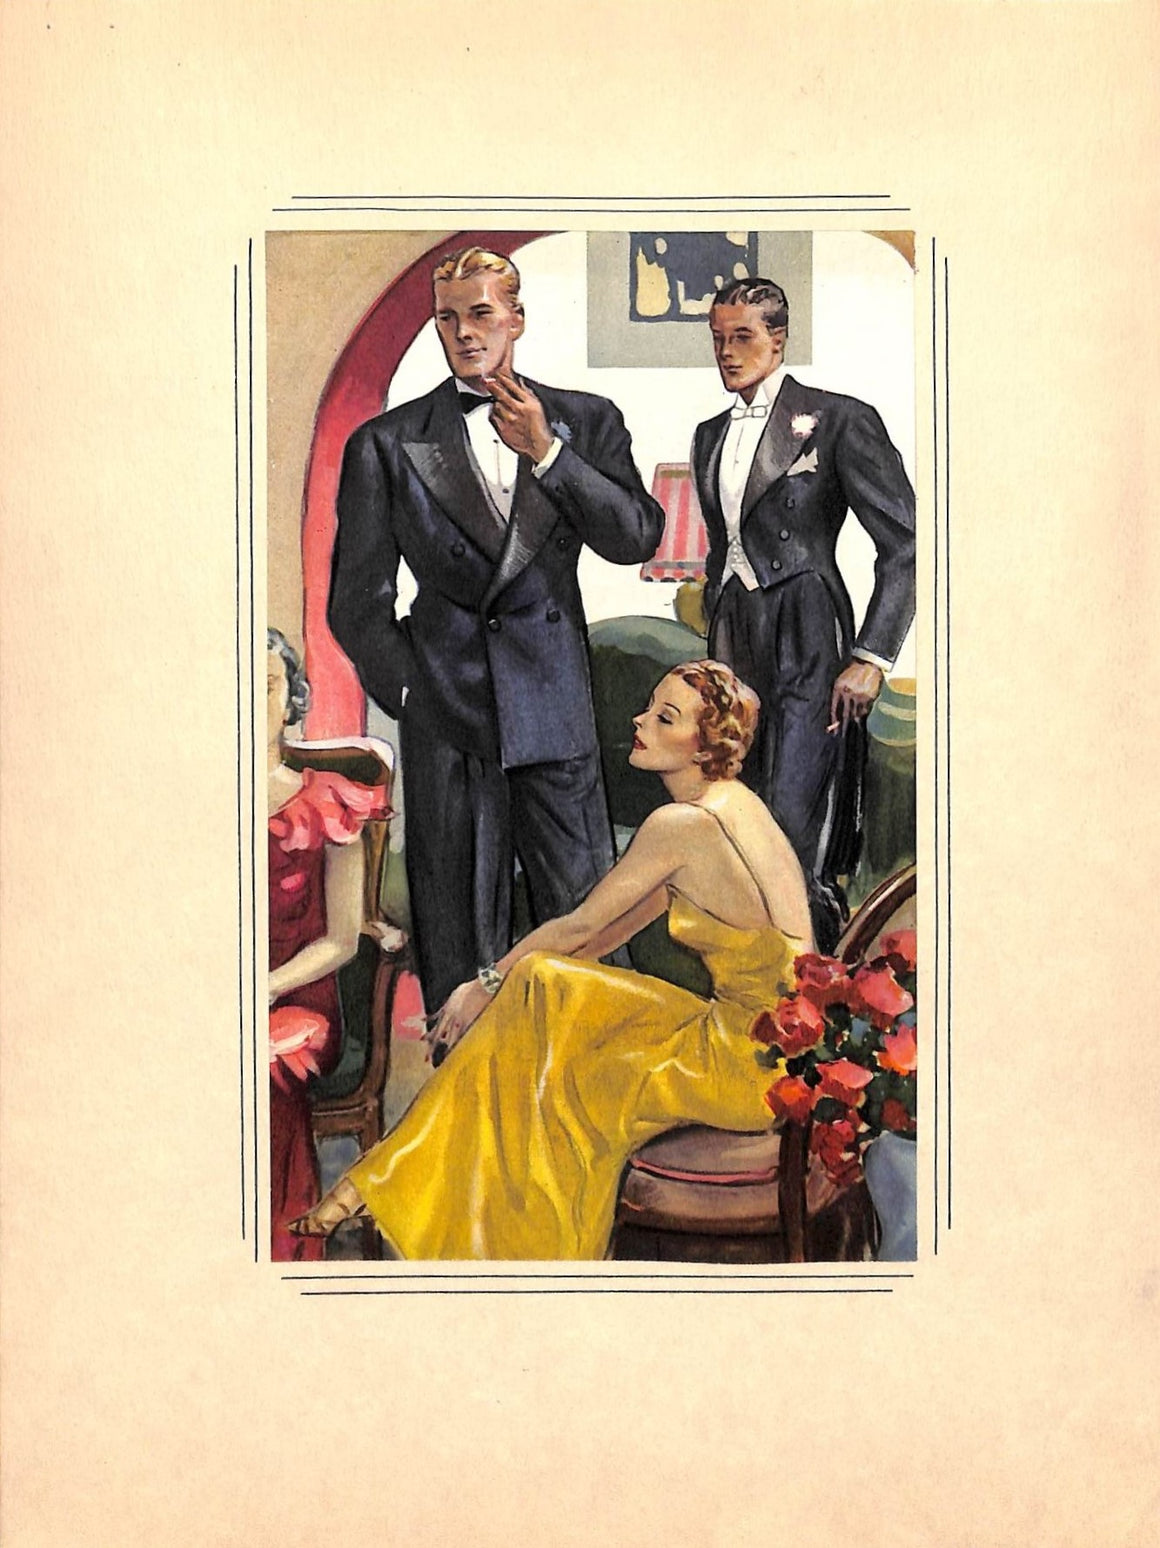 "Vintage c1930s Menswear Double-Sided Illustration Art"